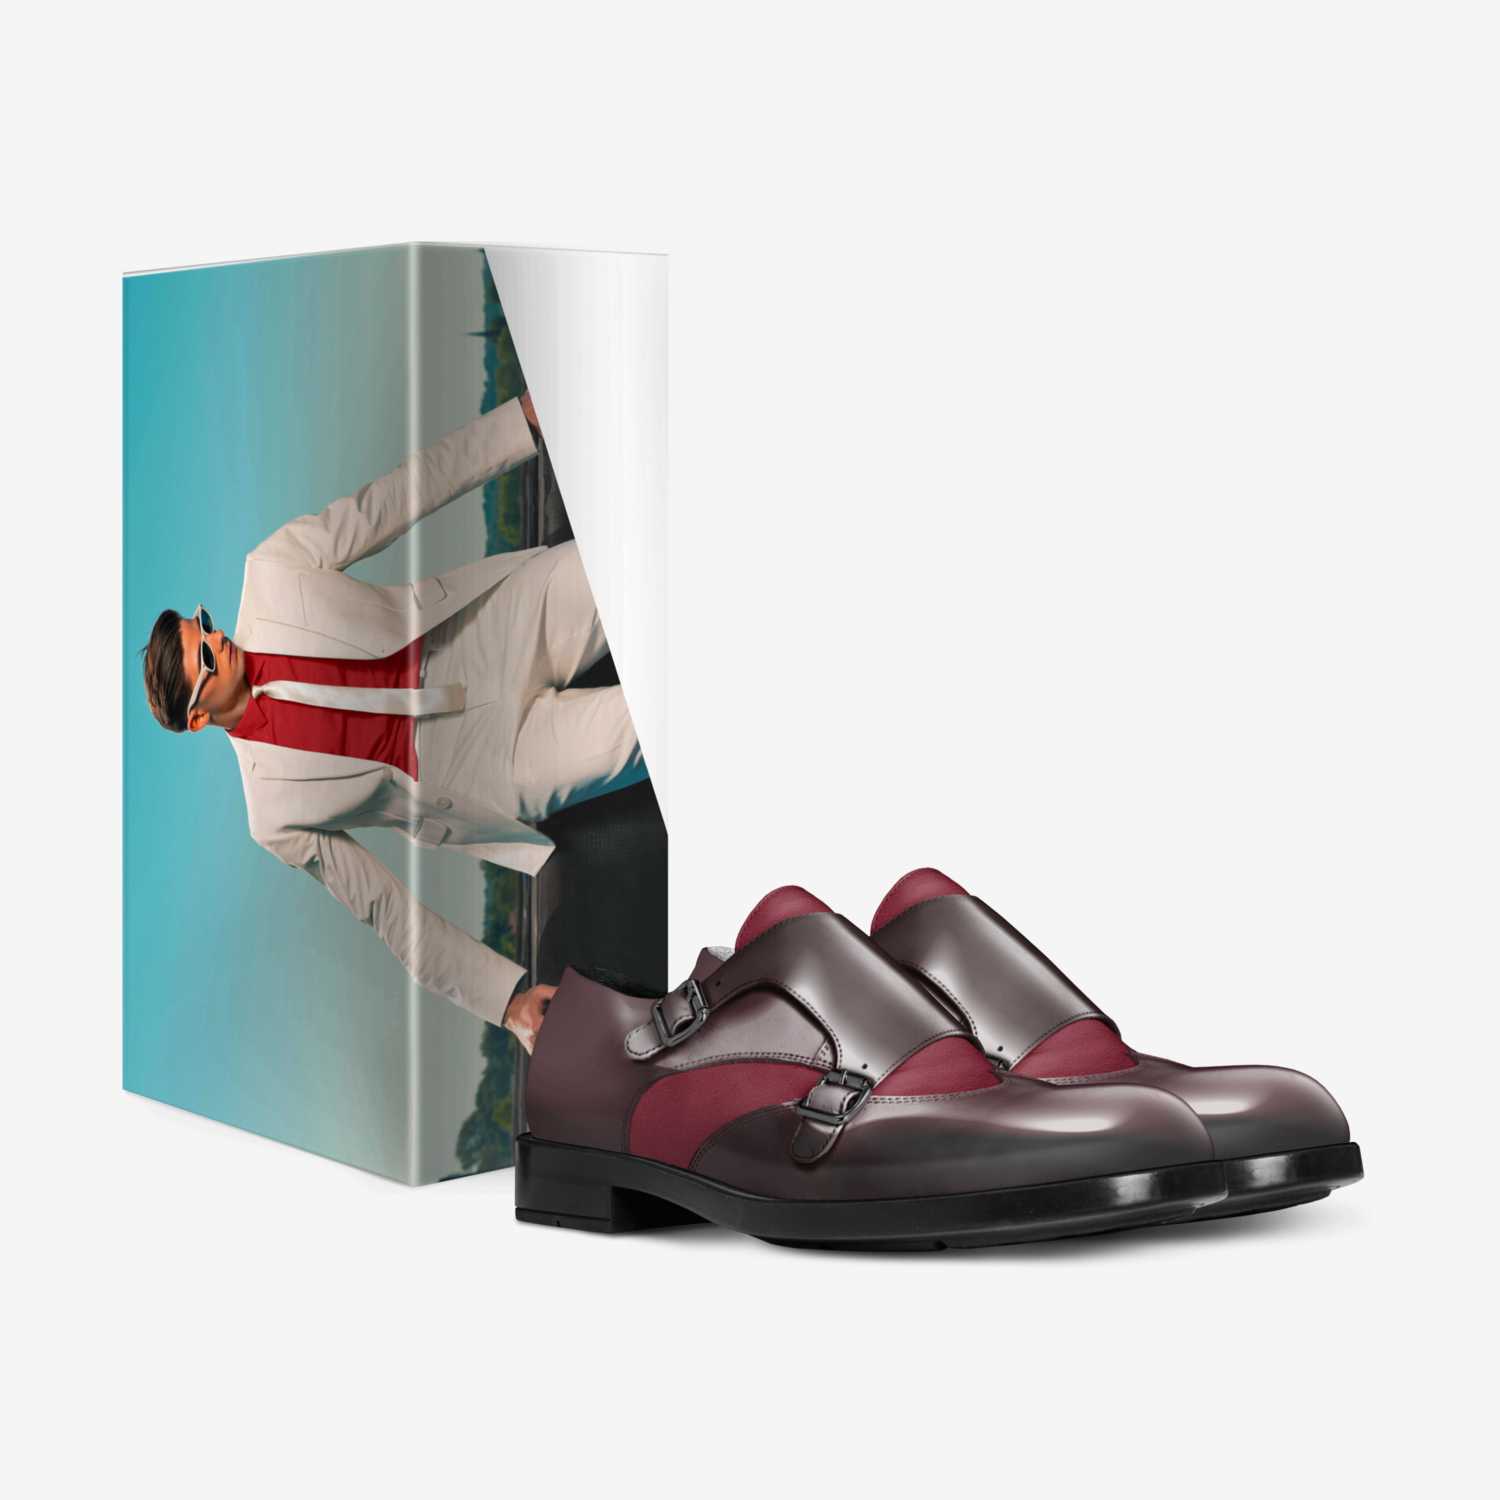 DEBONAIRBOIS custom made in Italy shoes by Natasha Price | Box view